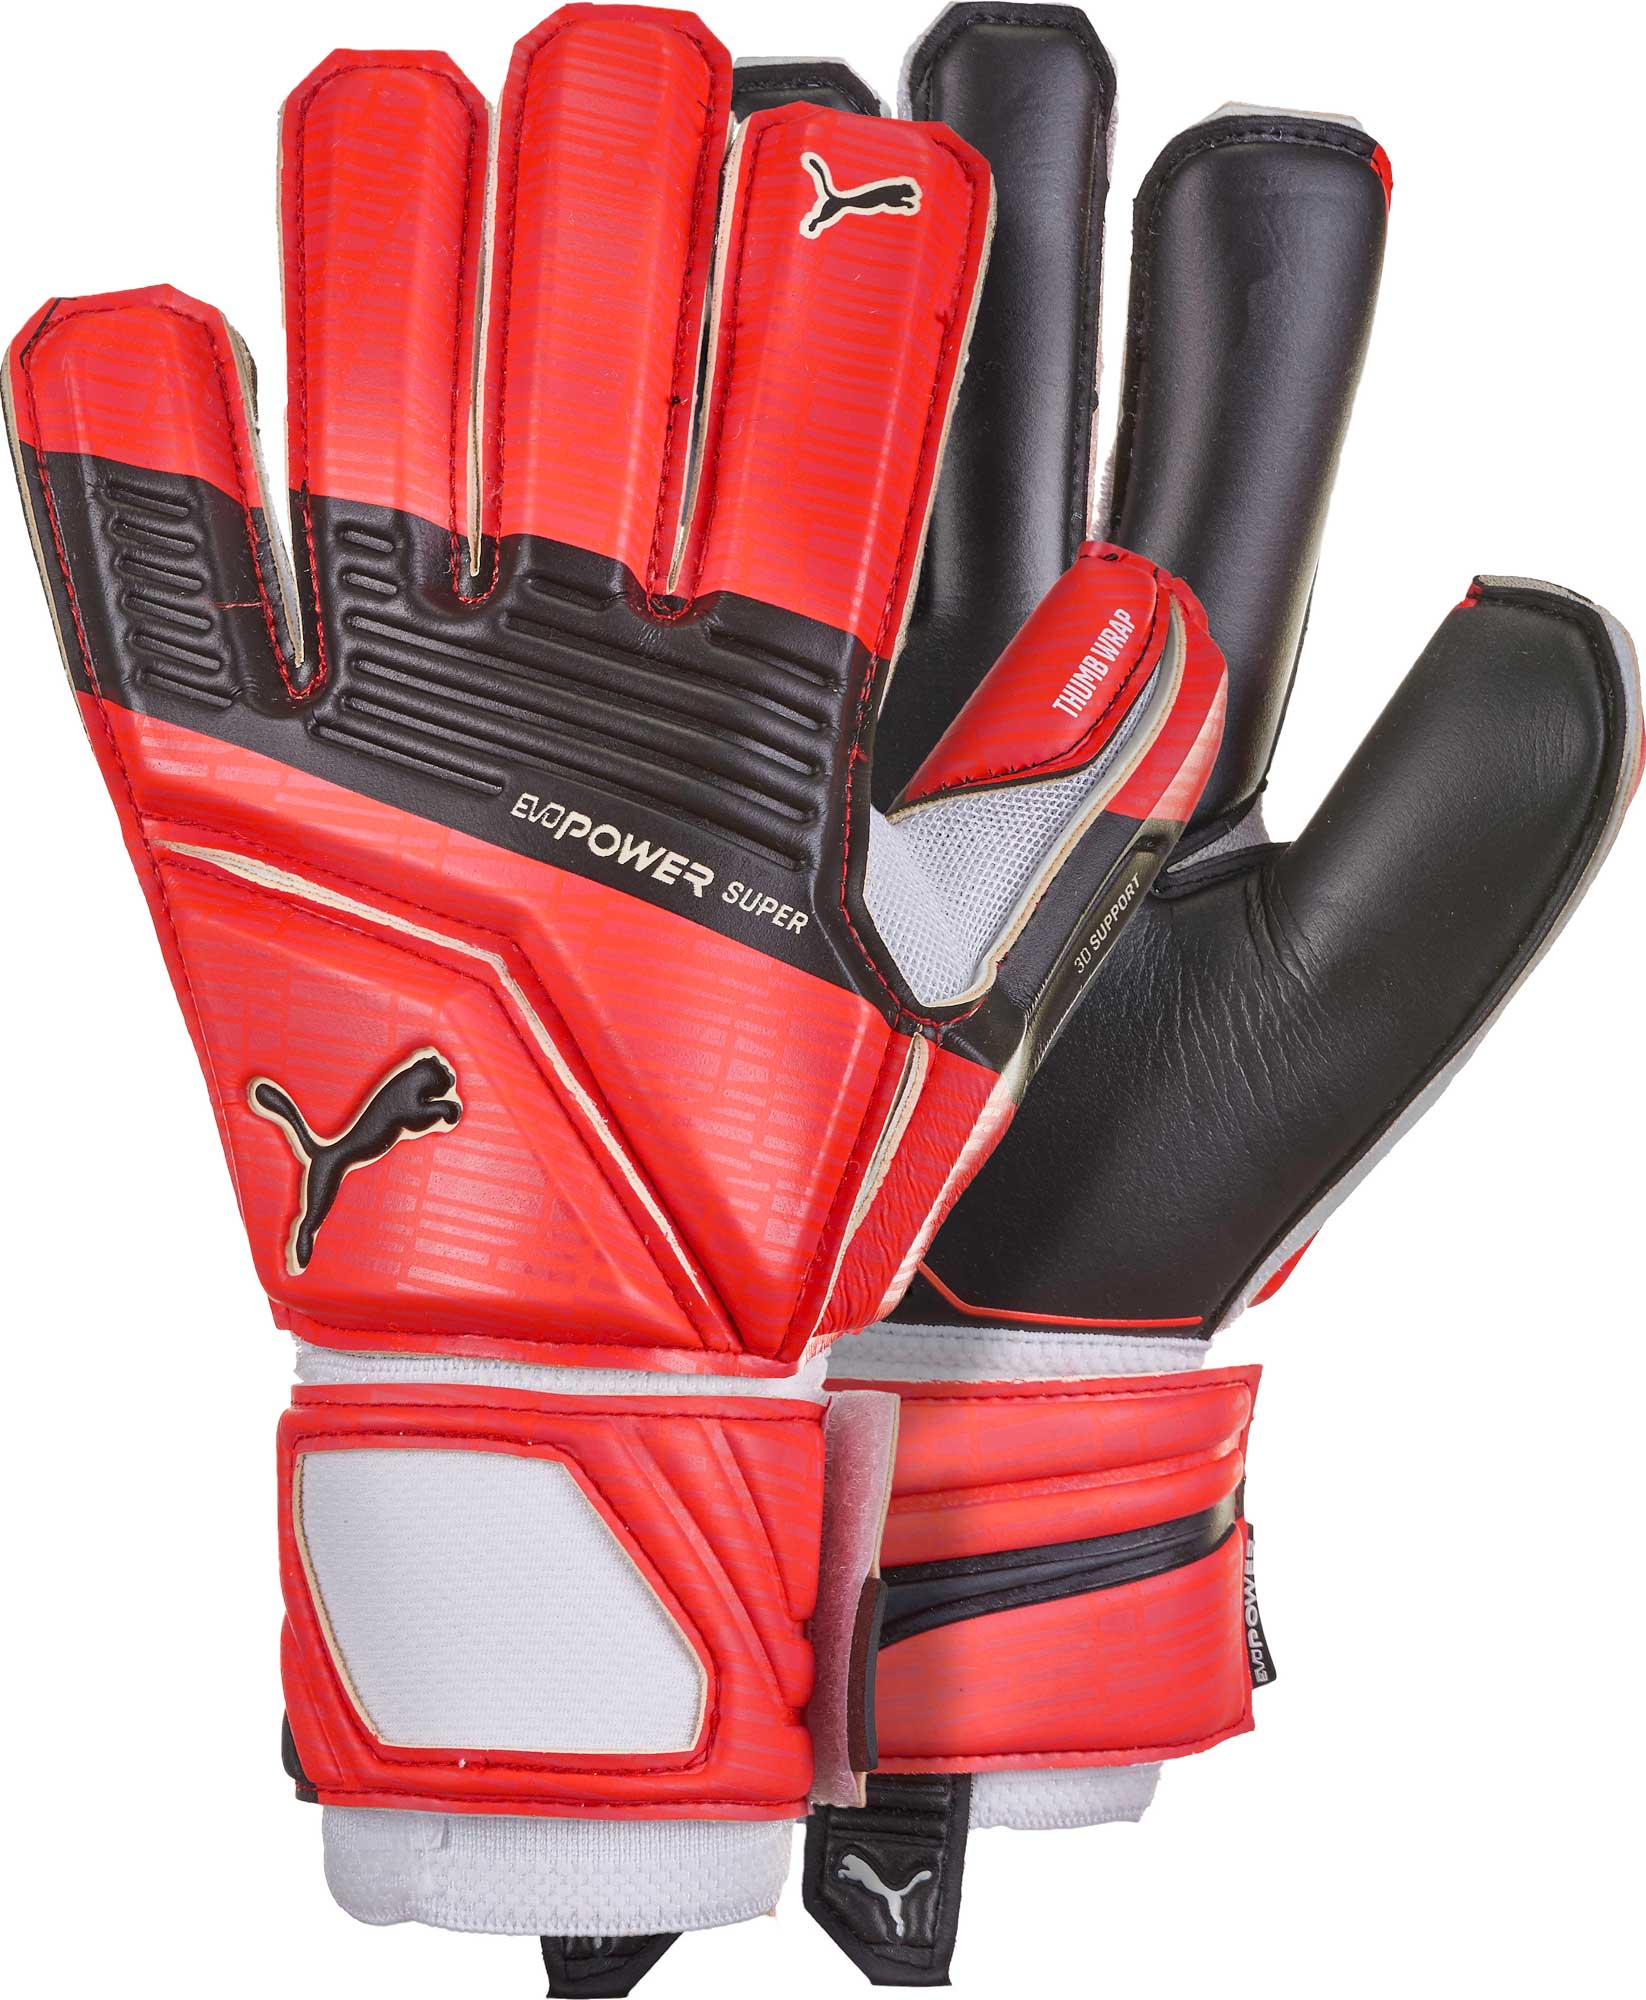 PUMA evoPOWER Super 3 Goalkeeper Gloves 